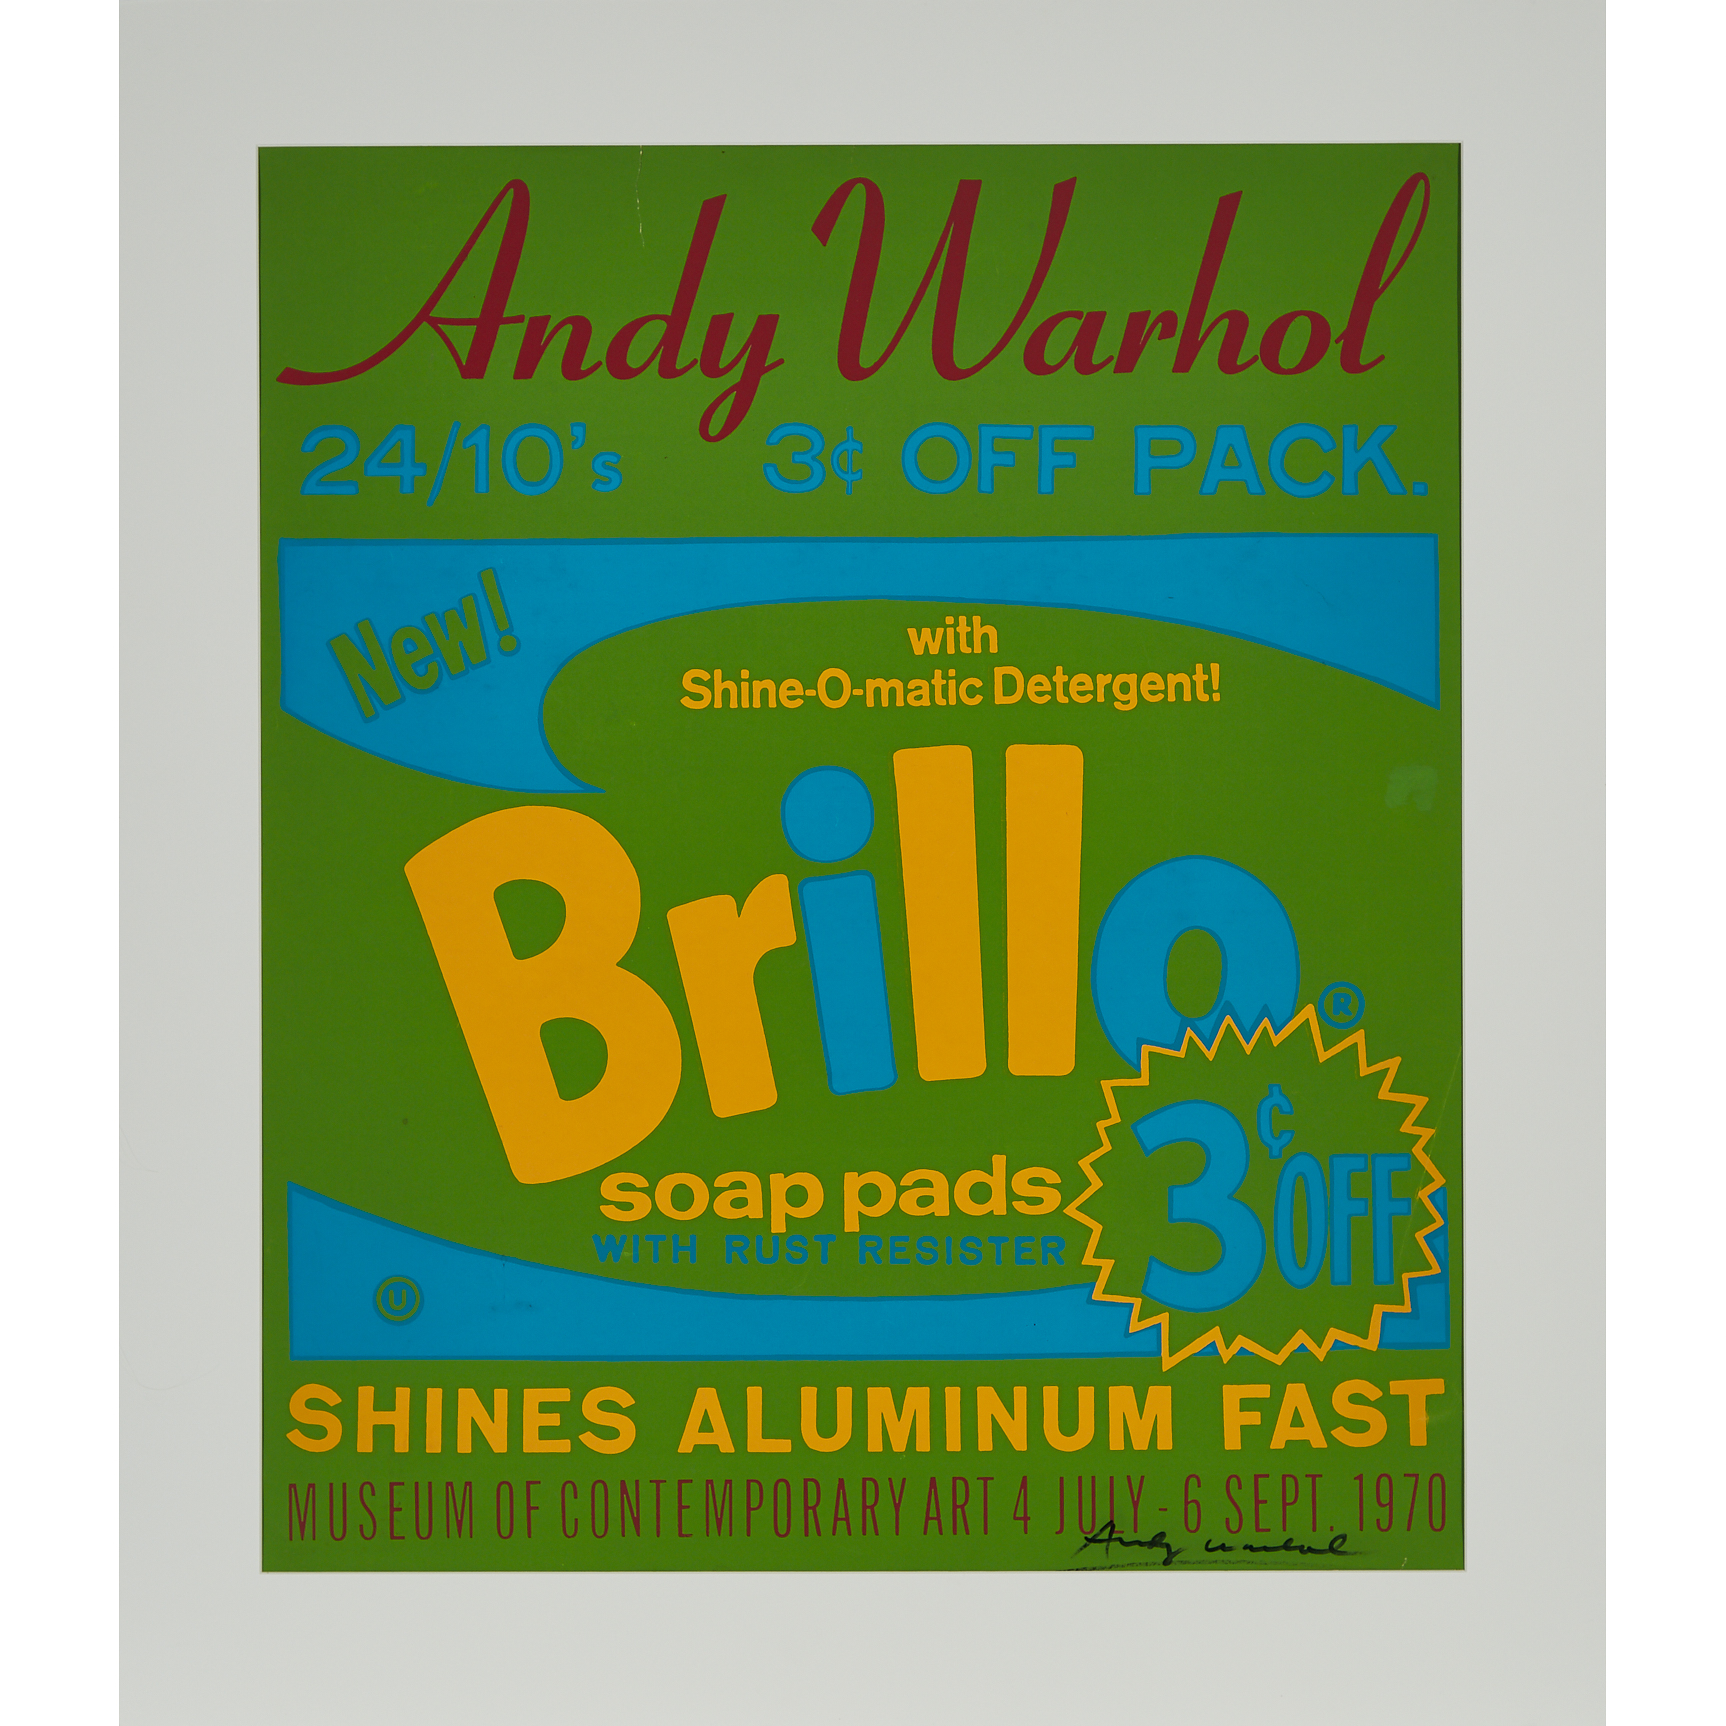 Andy Warhol (1928-1987)